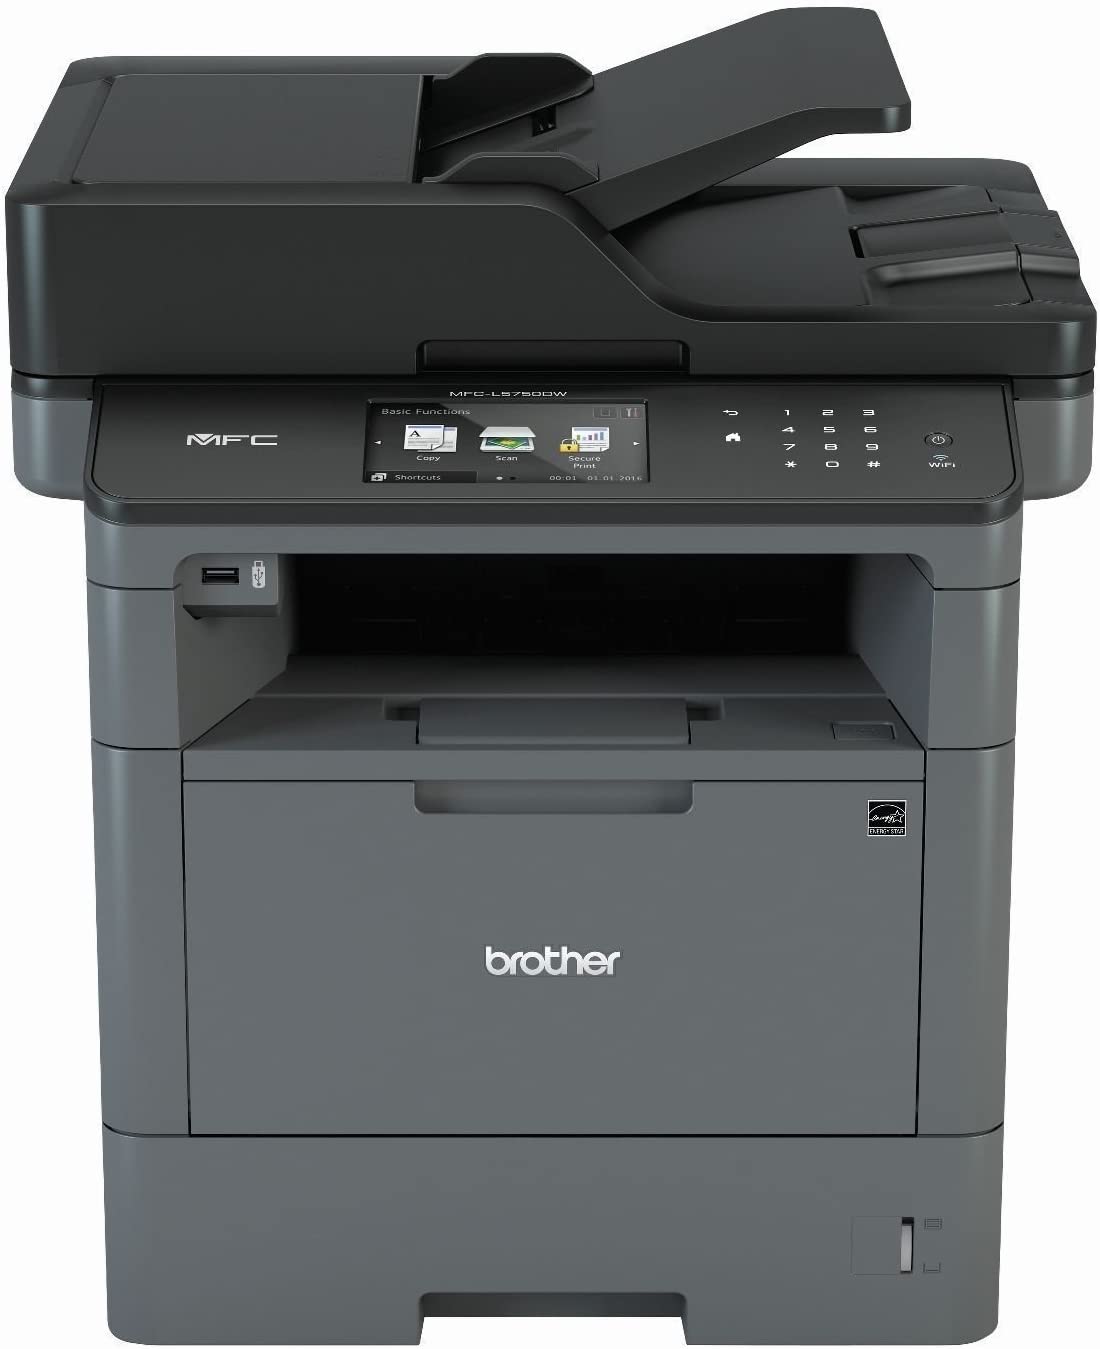 printer/scanner for mac os sierra